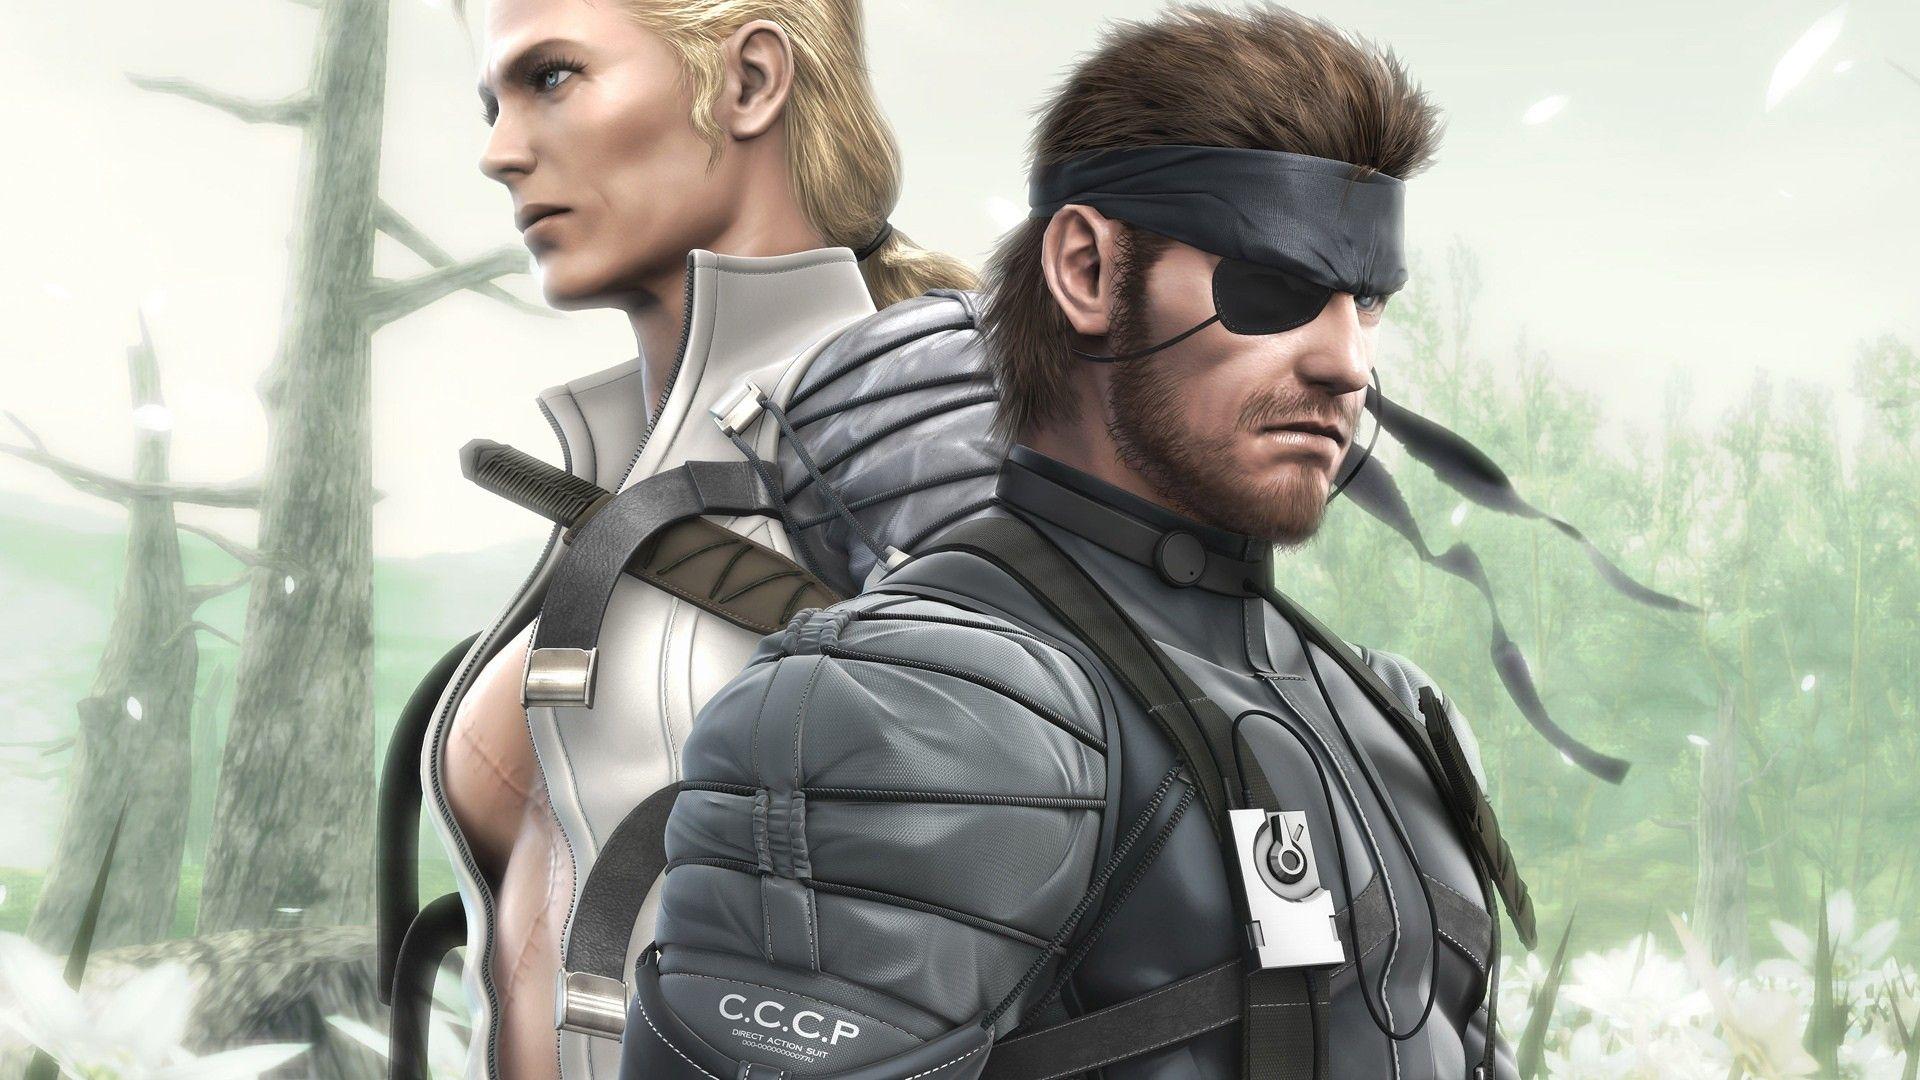 image For > Metal Gear 3 Wallpaper